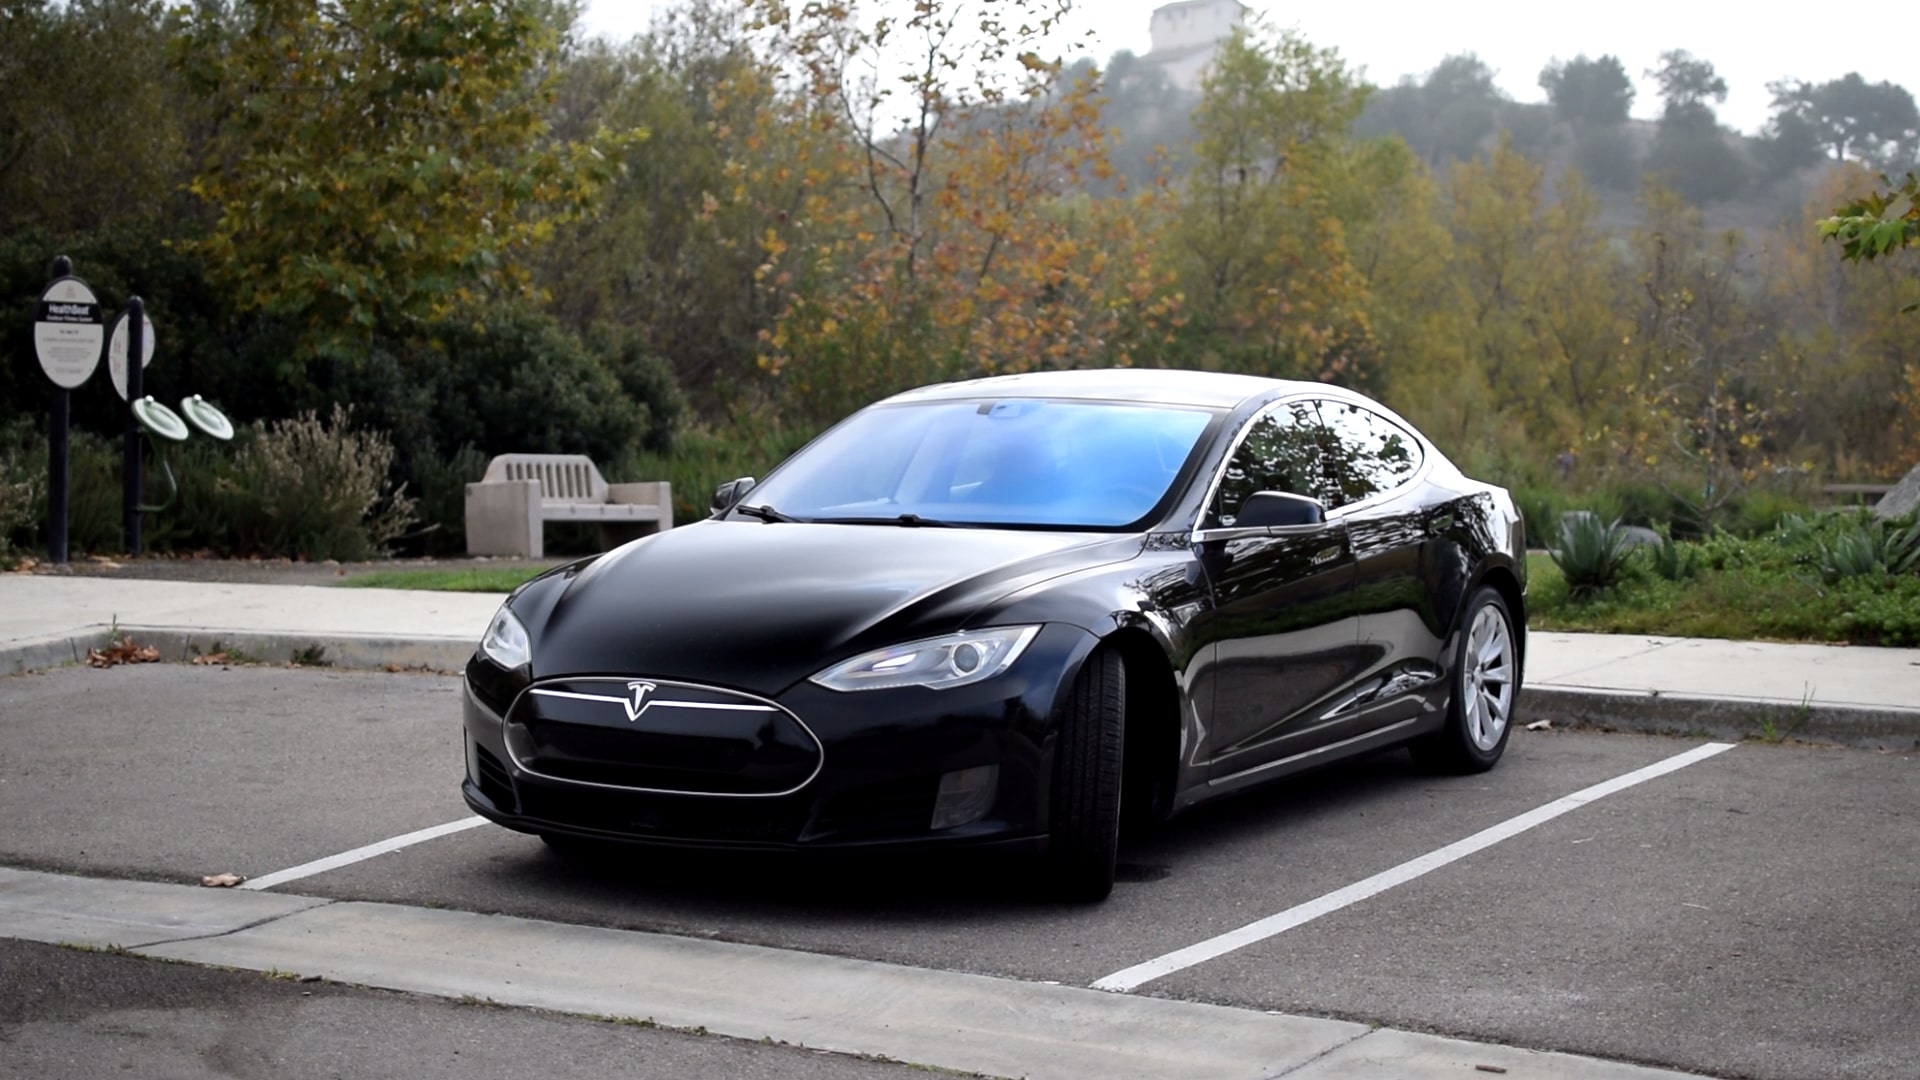 A black Tesla Model S EV sedan shot from the front 3/4 angle